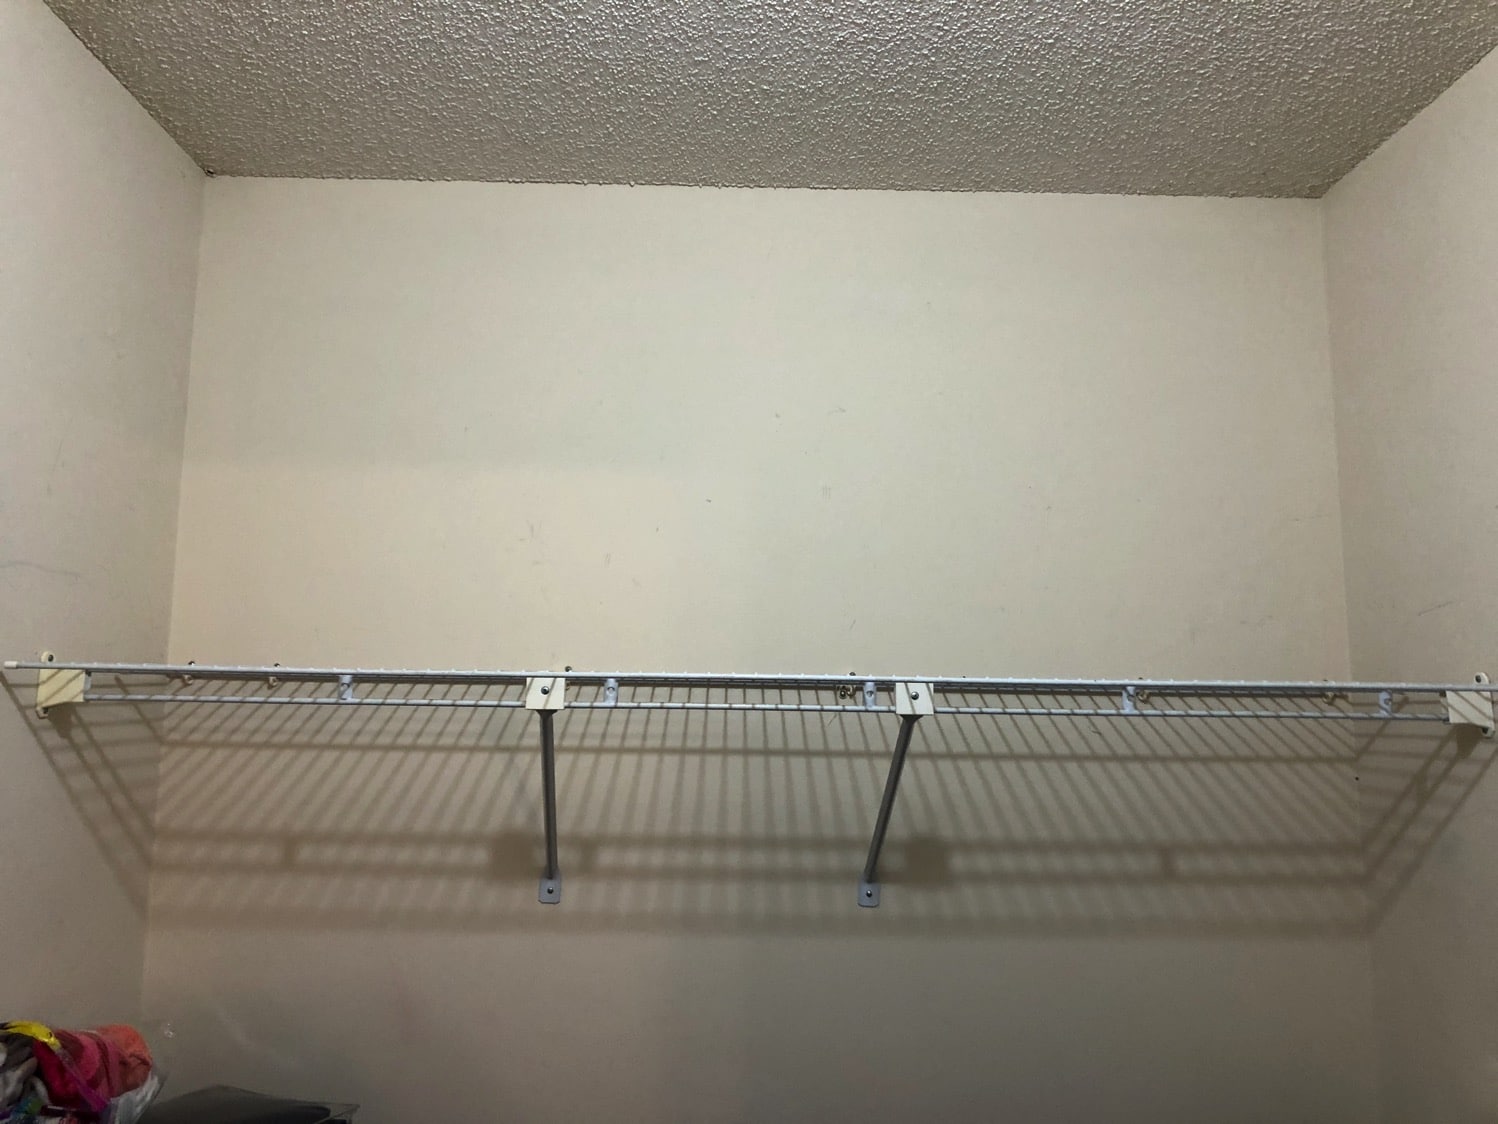 removing nasty wire closet shelf.jpg